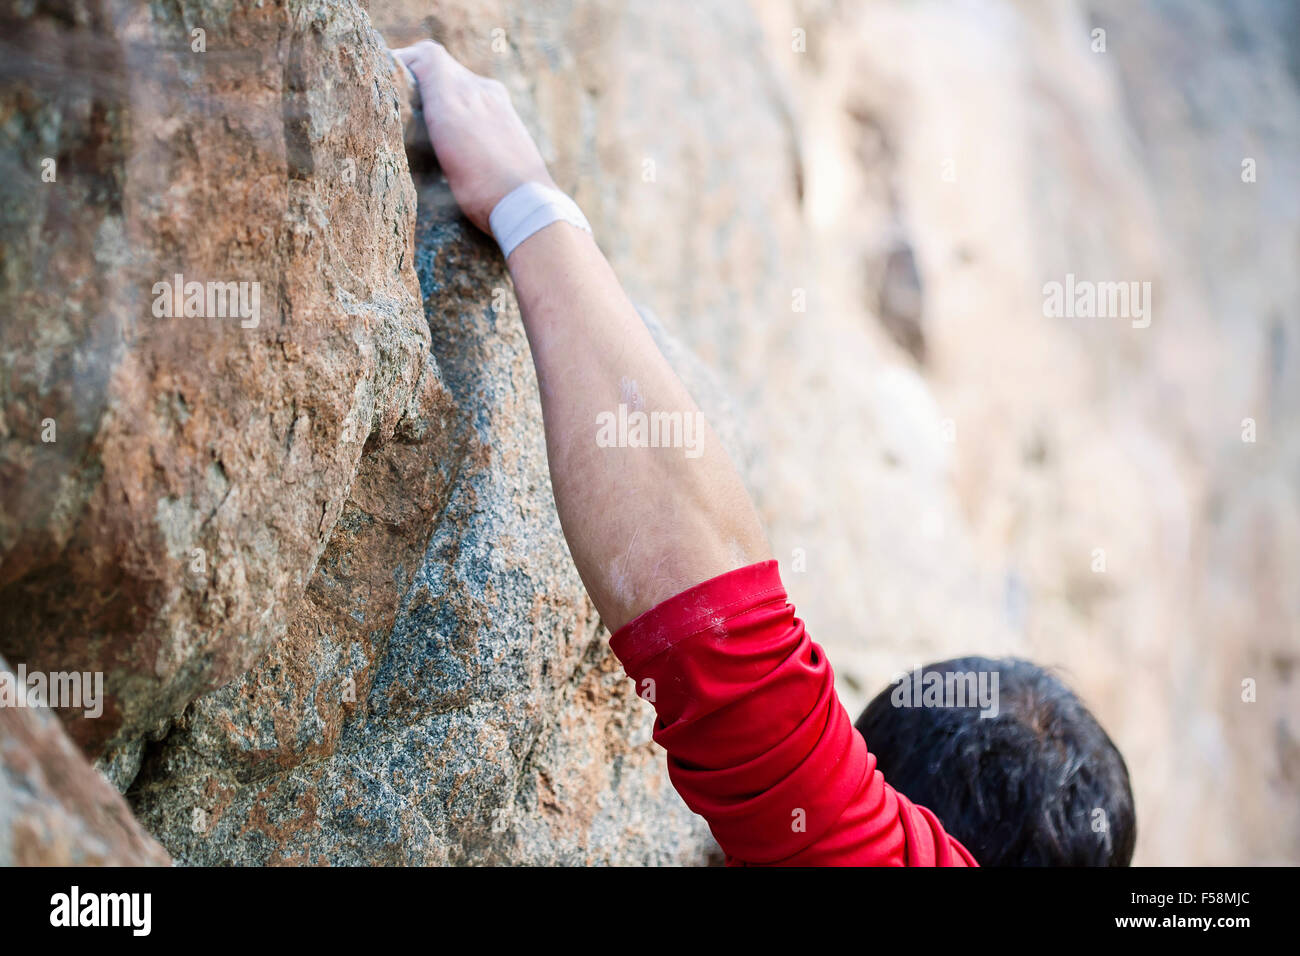 Rock climber's hand on handhold Stock Photo